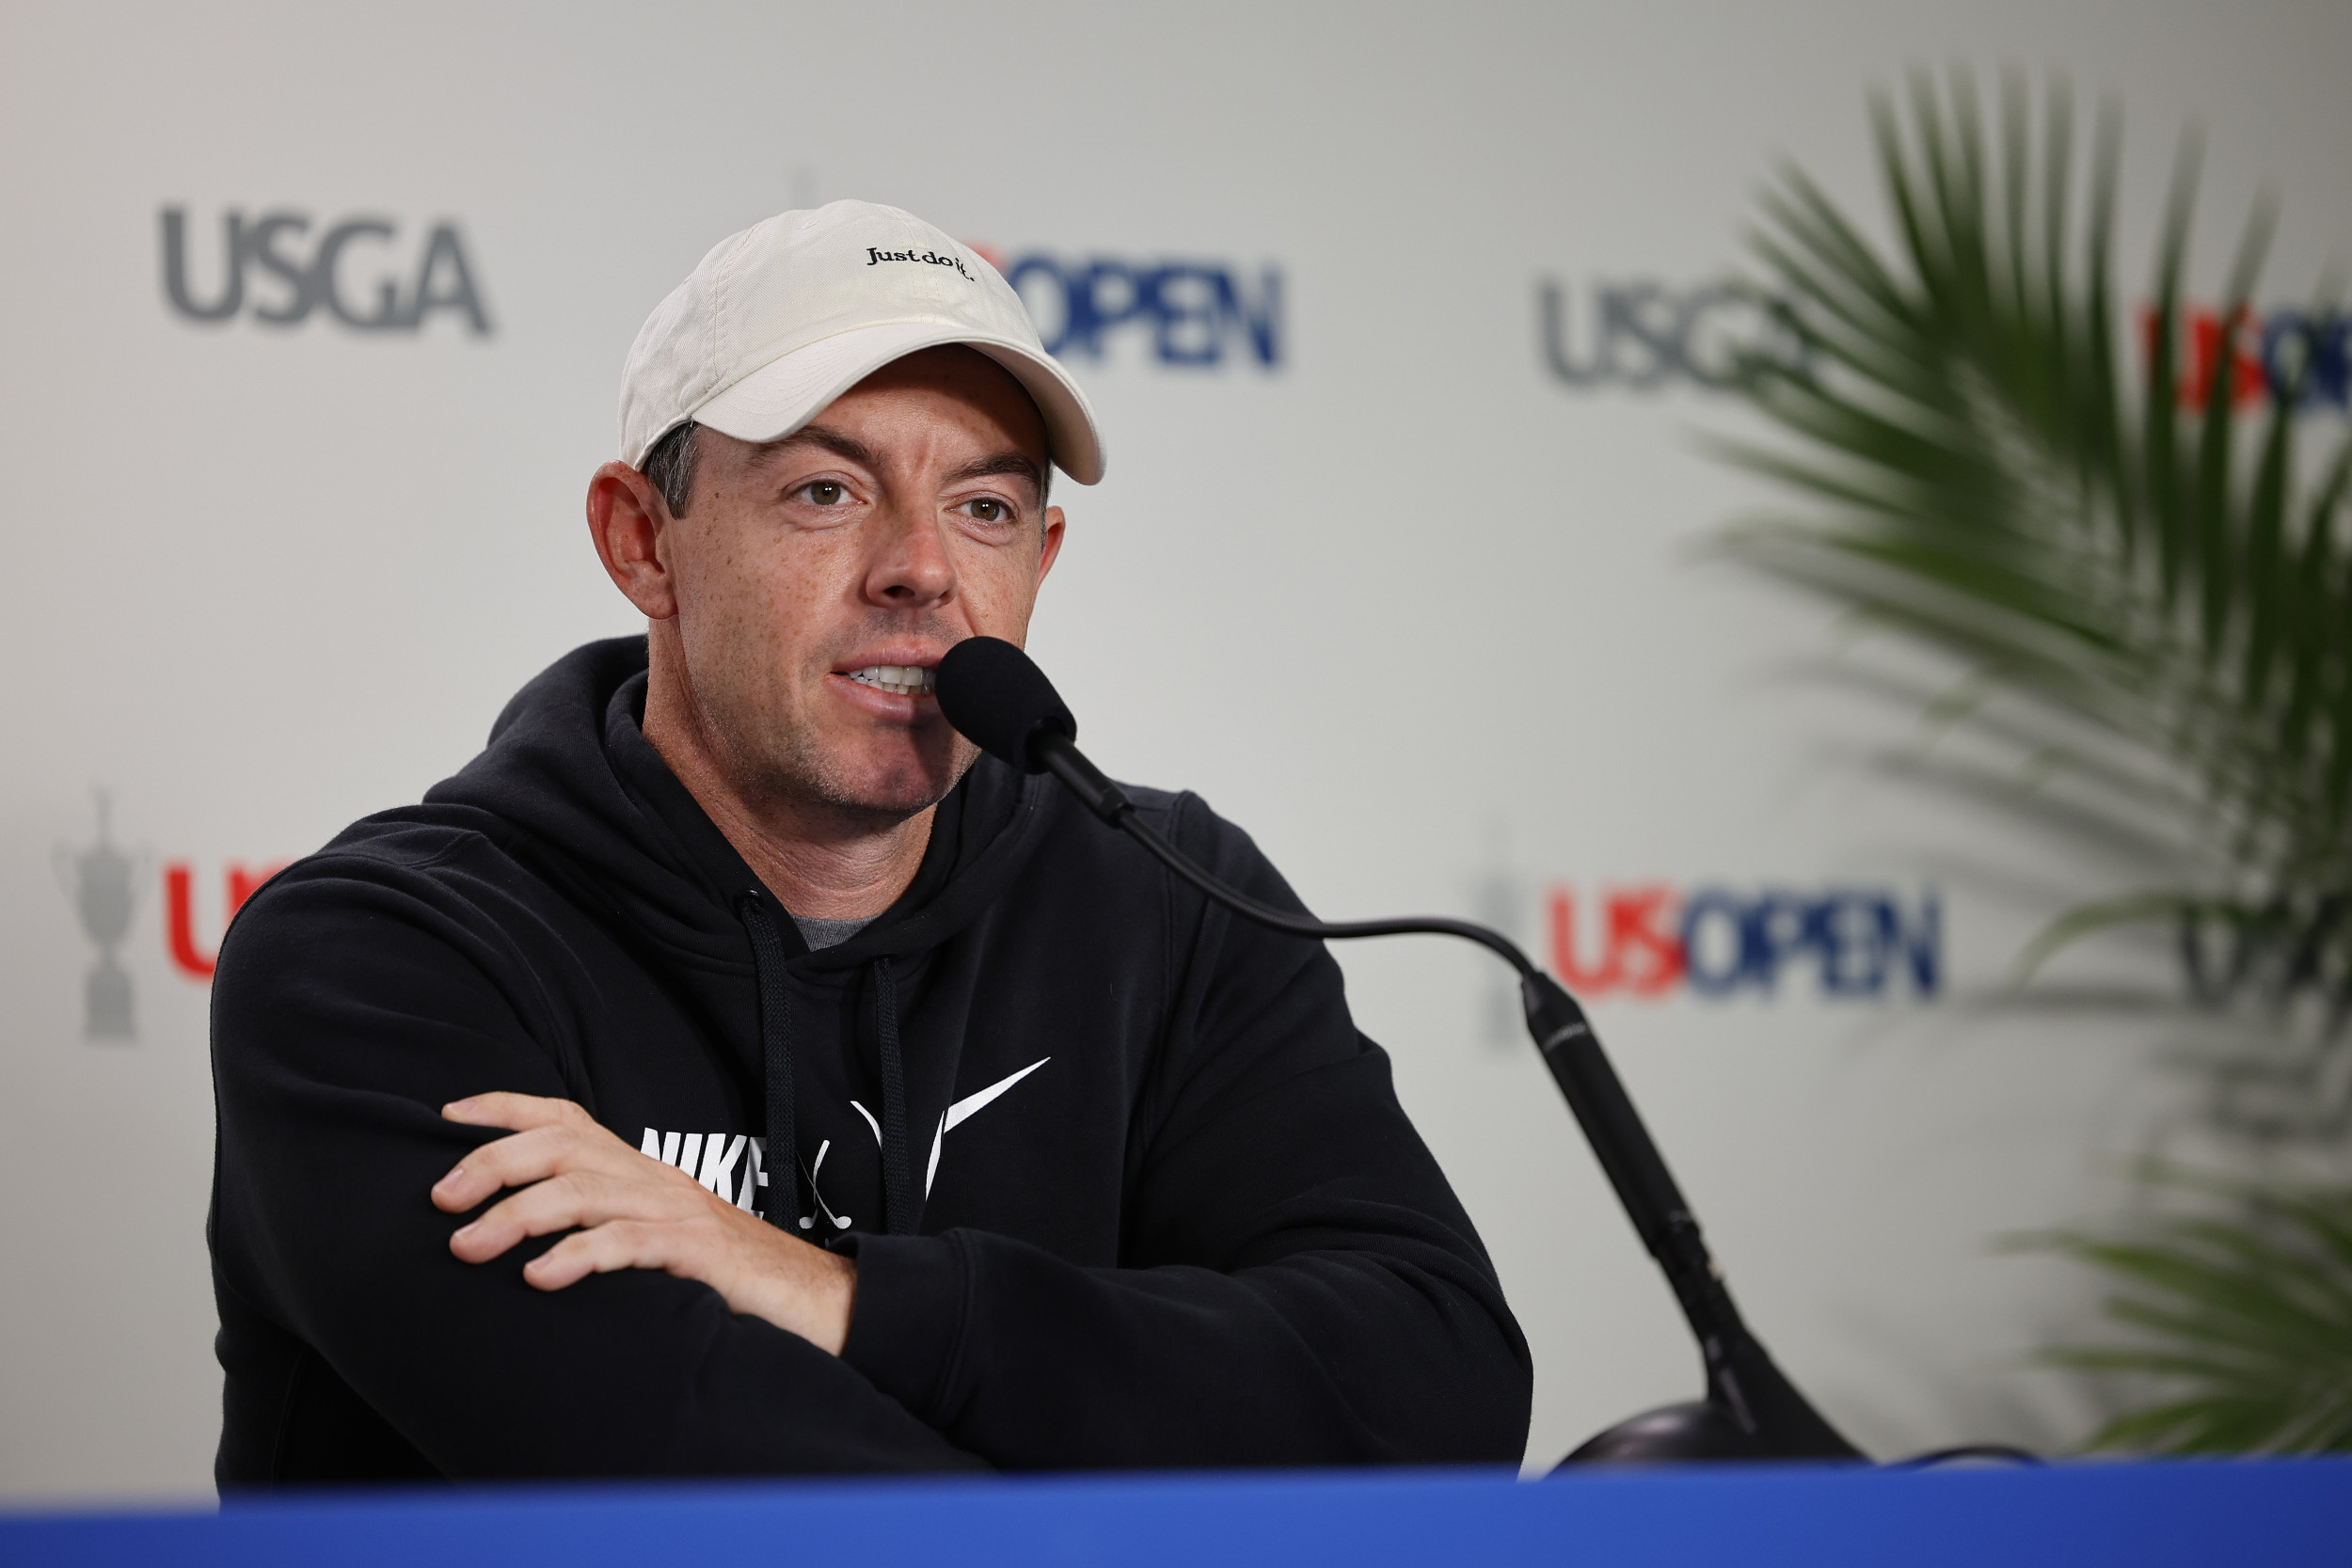 US Open News: World's No. 3 Golfer Announces He Isn't Getting Divorced